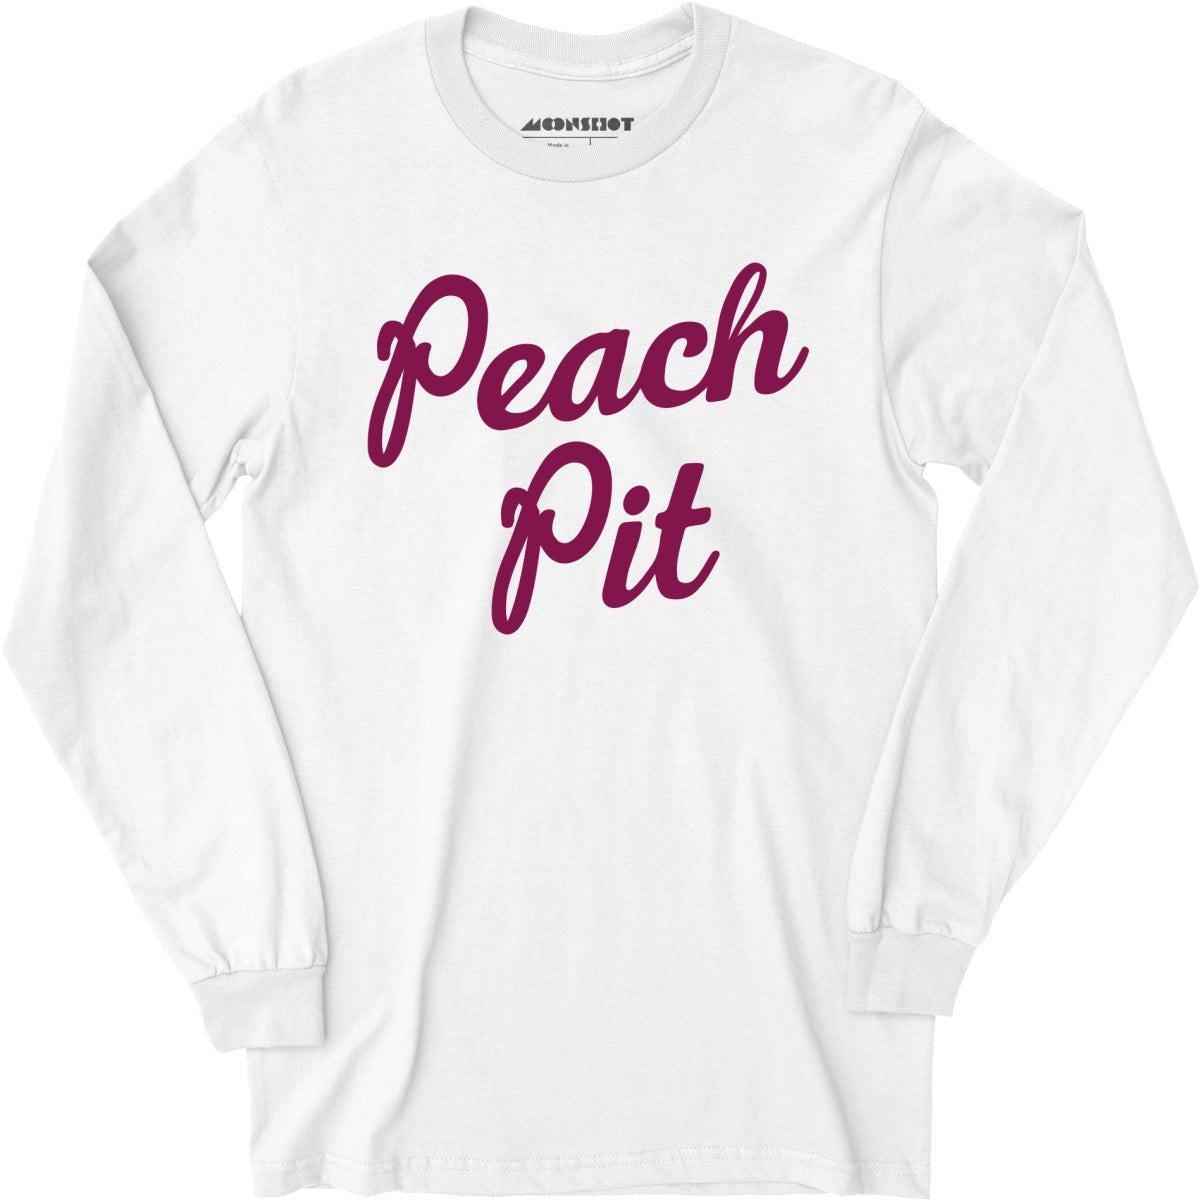 Peach Pit 90210 - Long Sleeve T-Shirt